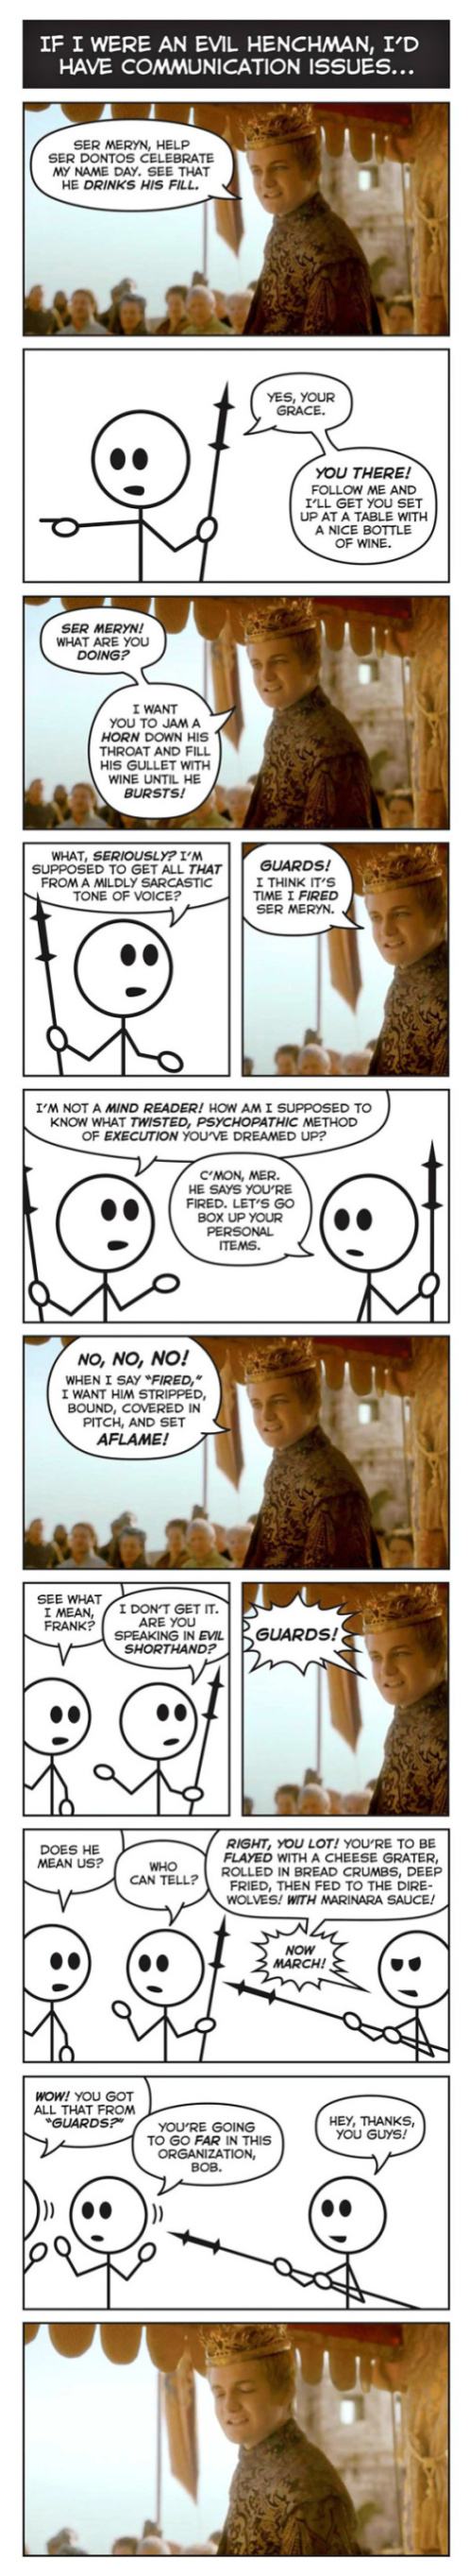 Obrázek Game of Thrones logic - 14-06-2012